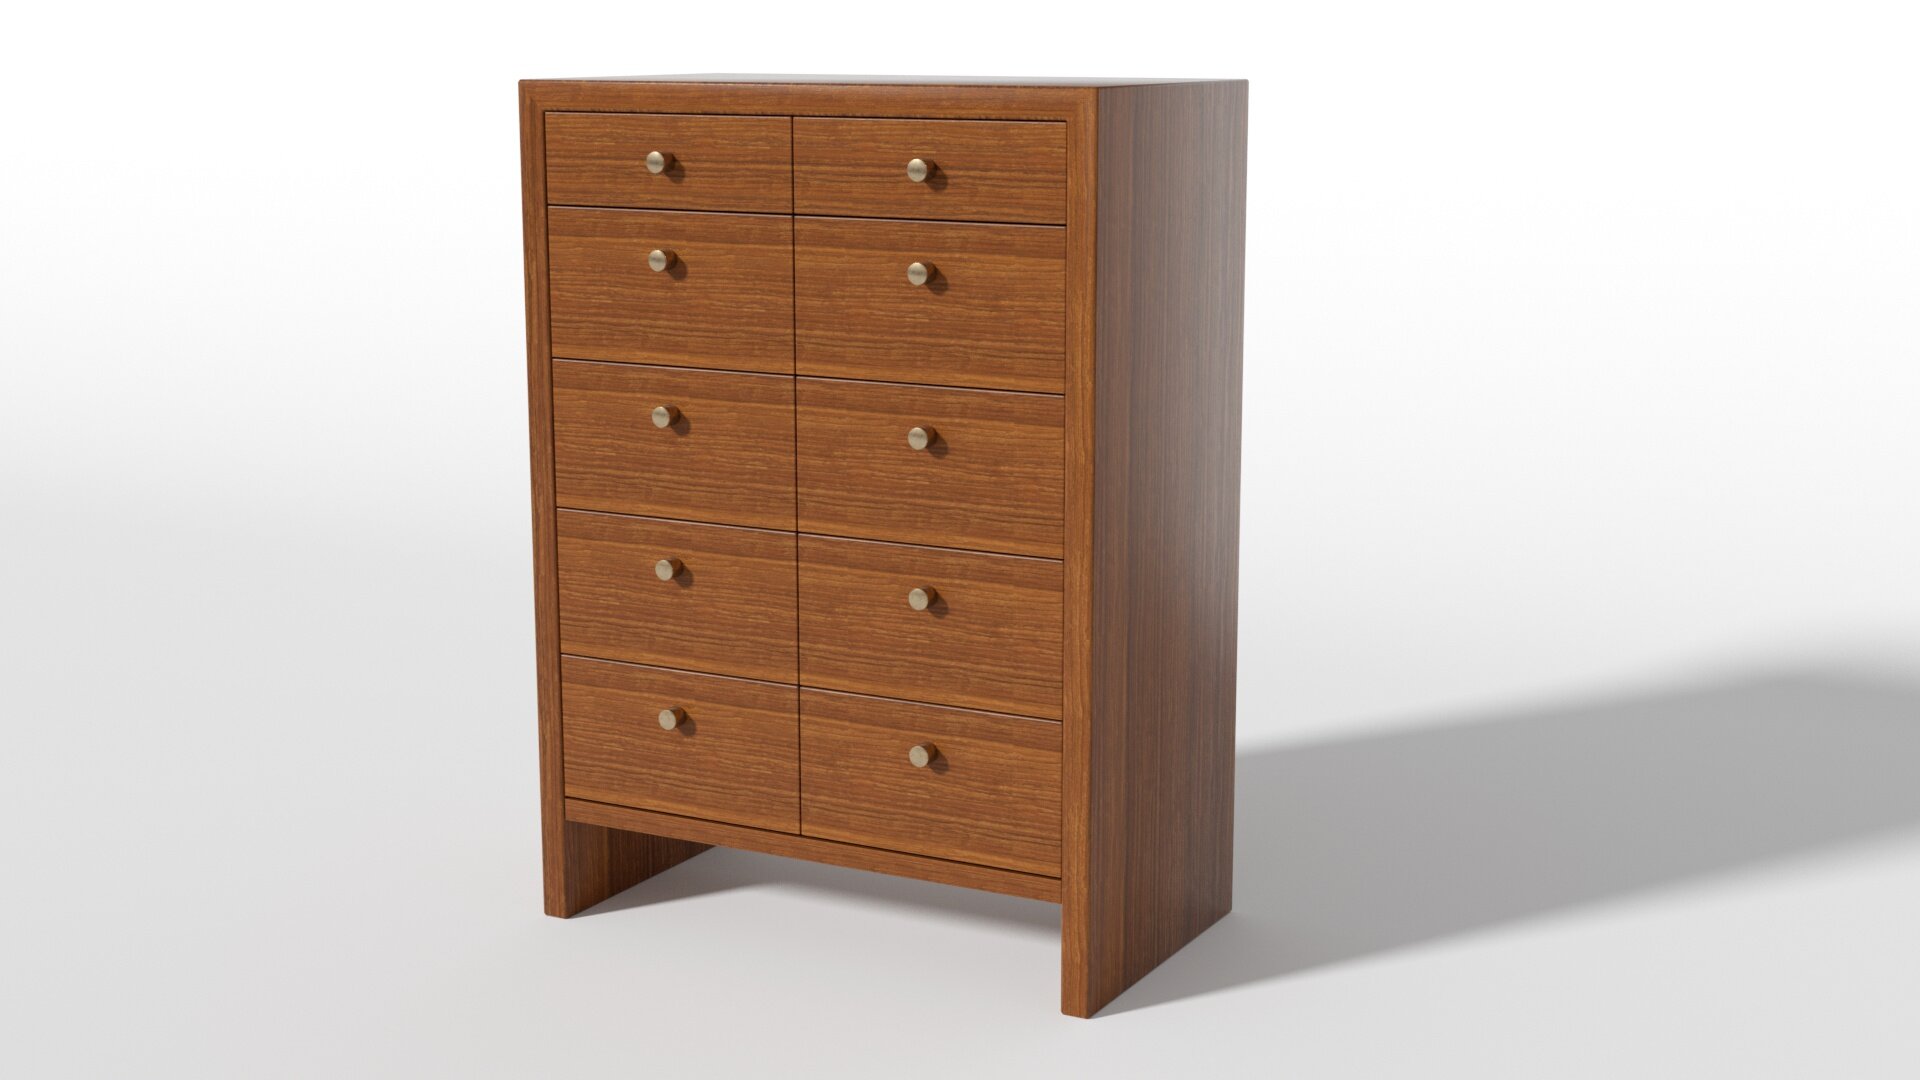 EK_Reedy_Furniture_Double_Drawer_Bureau_Solid_Walnut_Luxury_Modern_Handmade_Furniture.jpg